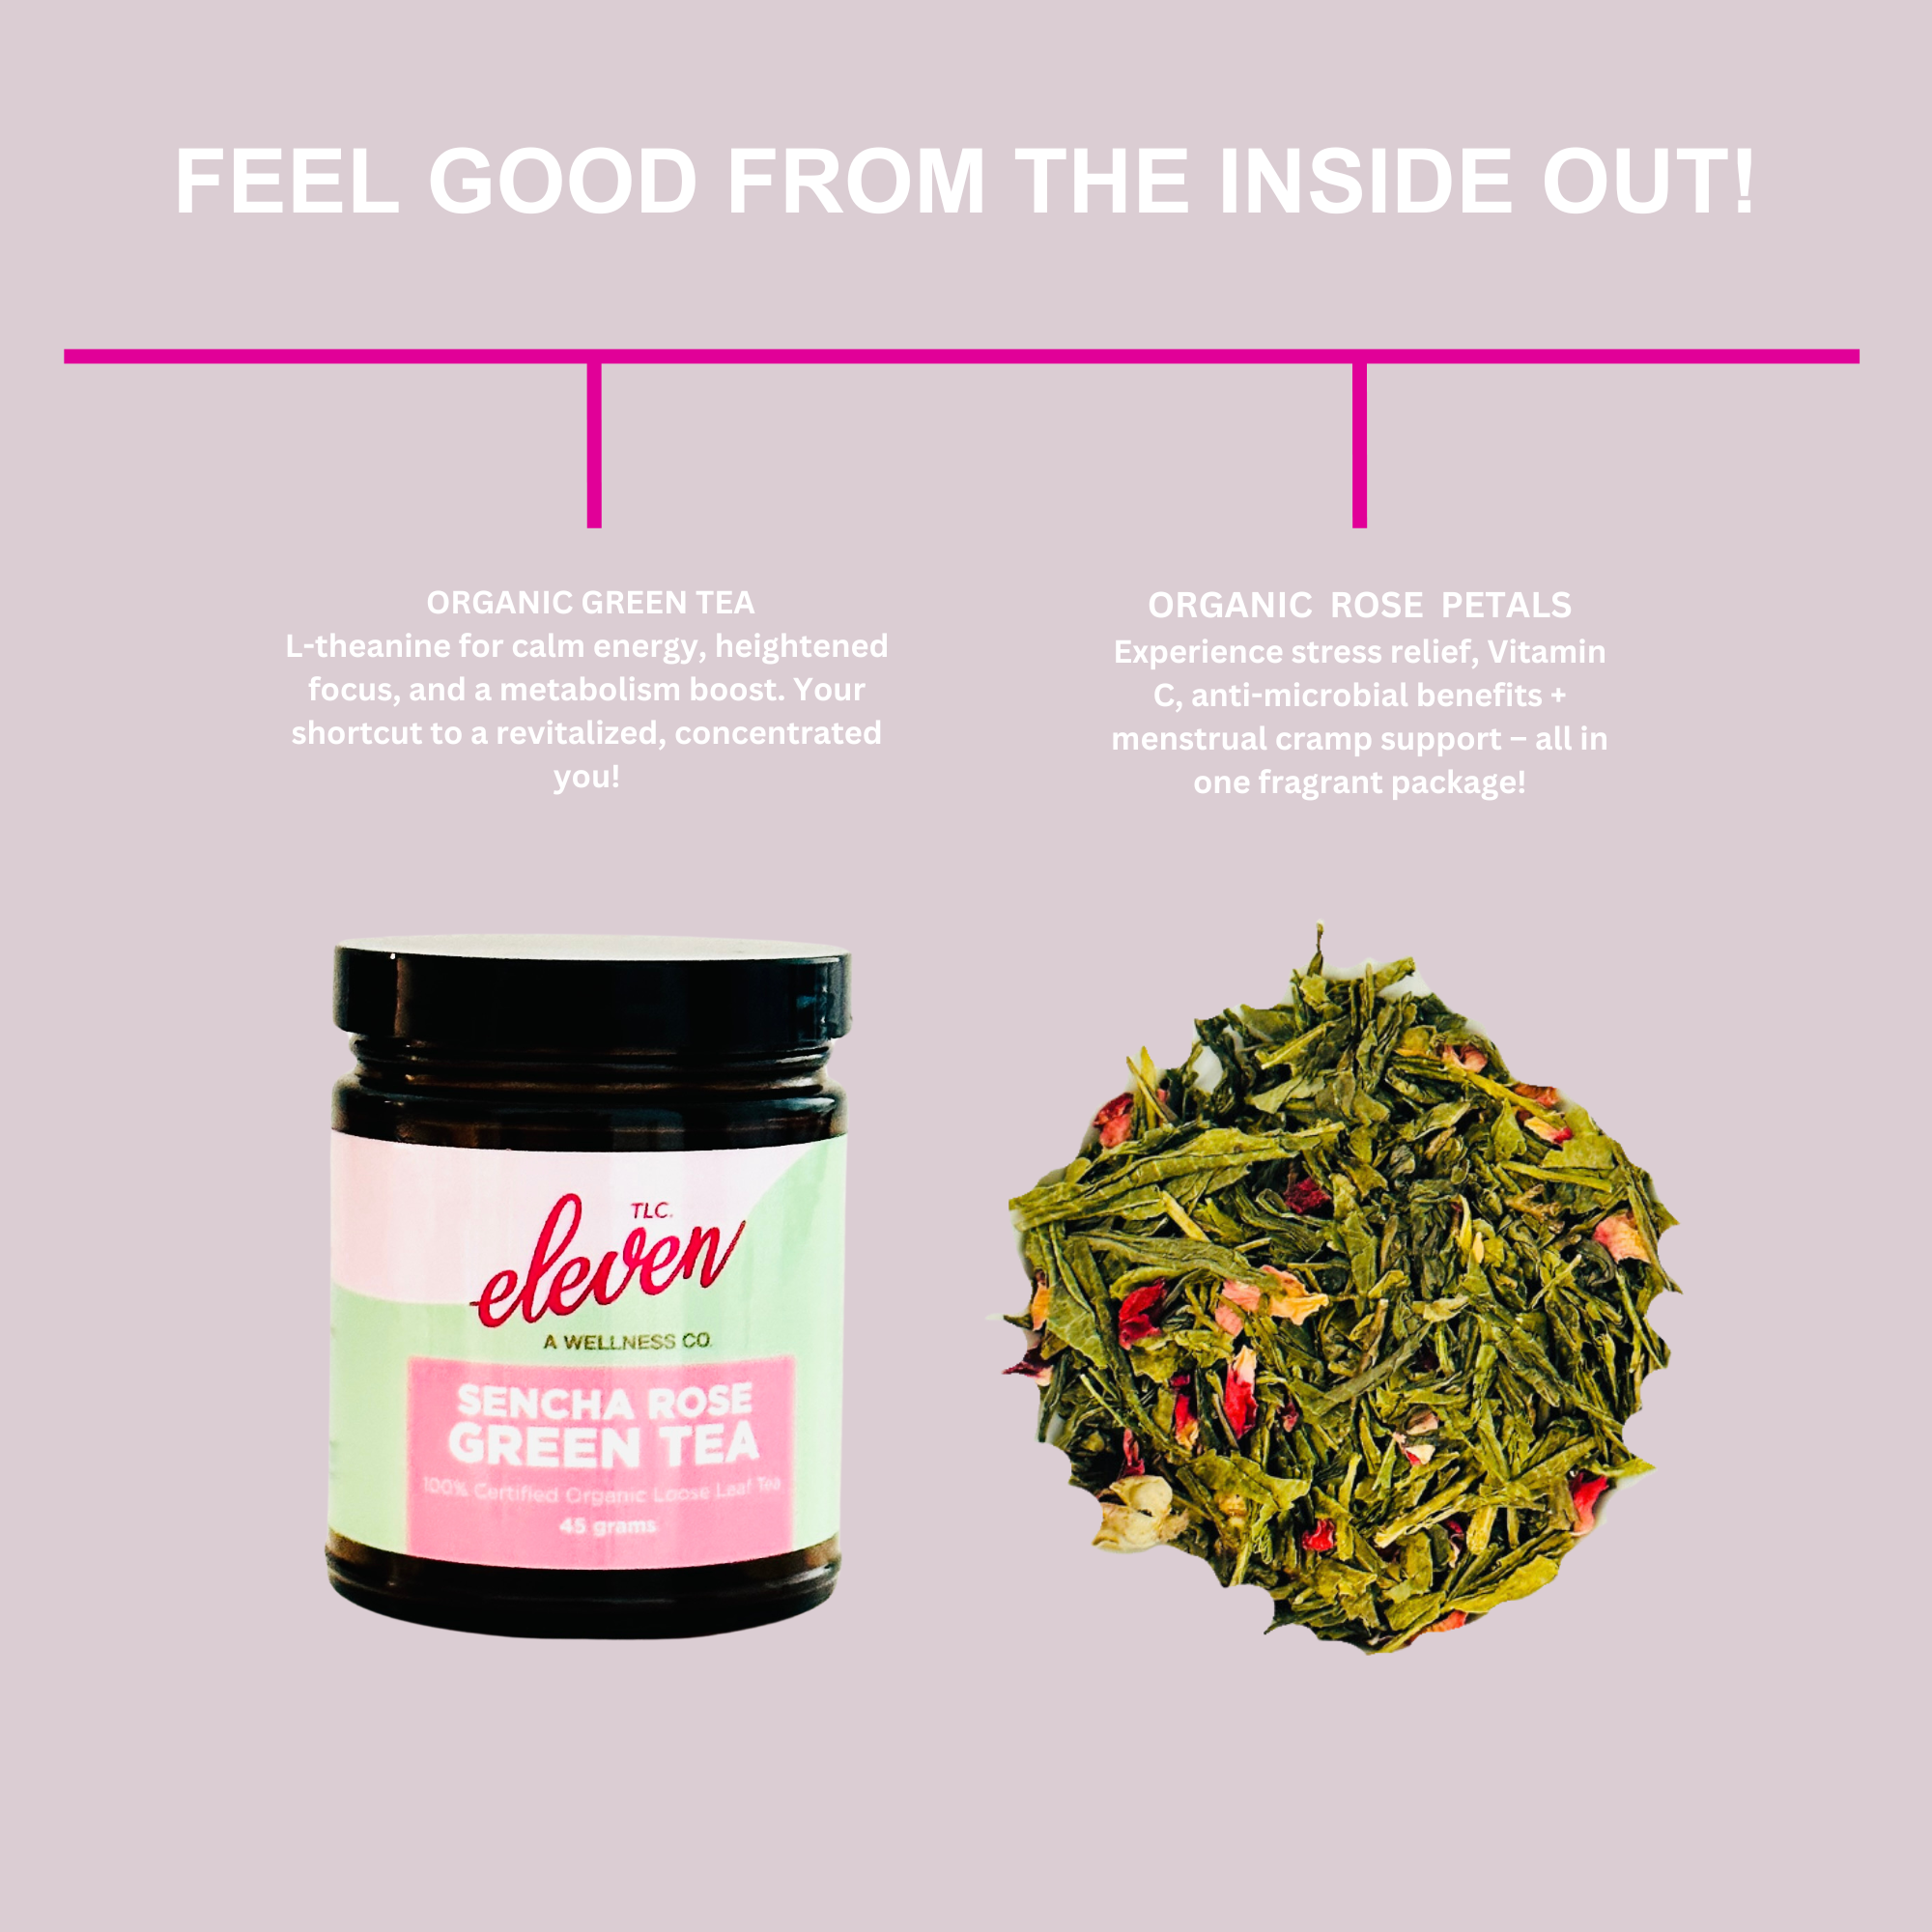 Sencha Rose Green Tea | Organic Loose Leaf Tea